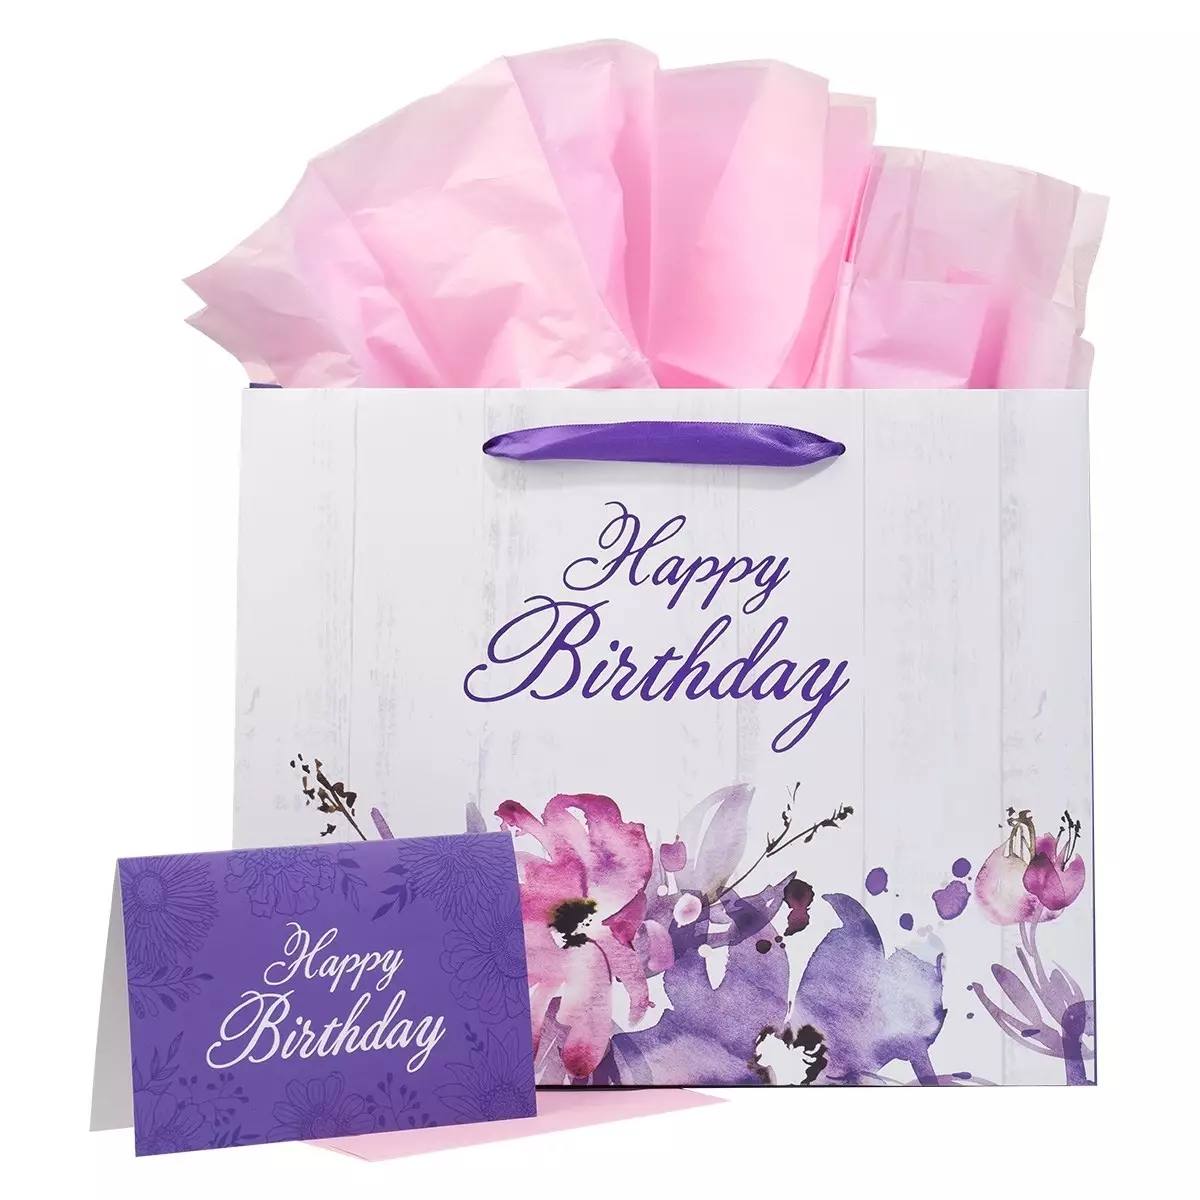 Gift Bag w/ Card LG Landscape White/Purple/Pink Happy Birthday